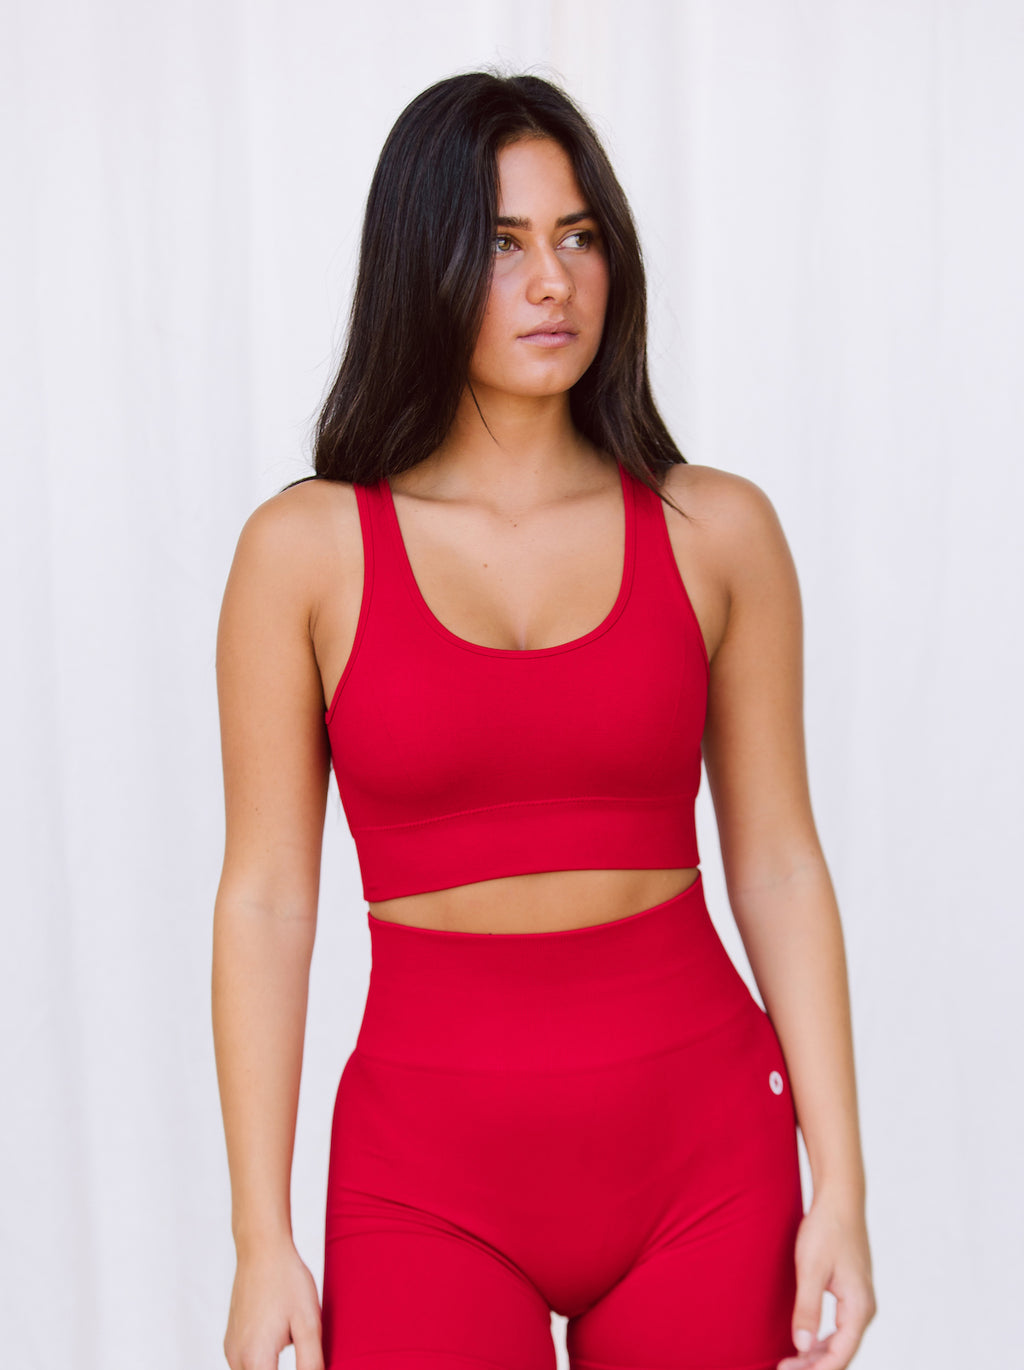 Pena Flex Sports Bra Red Dark Paisley Floral Print- Activewear – Blissfully  Brand